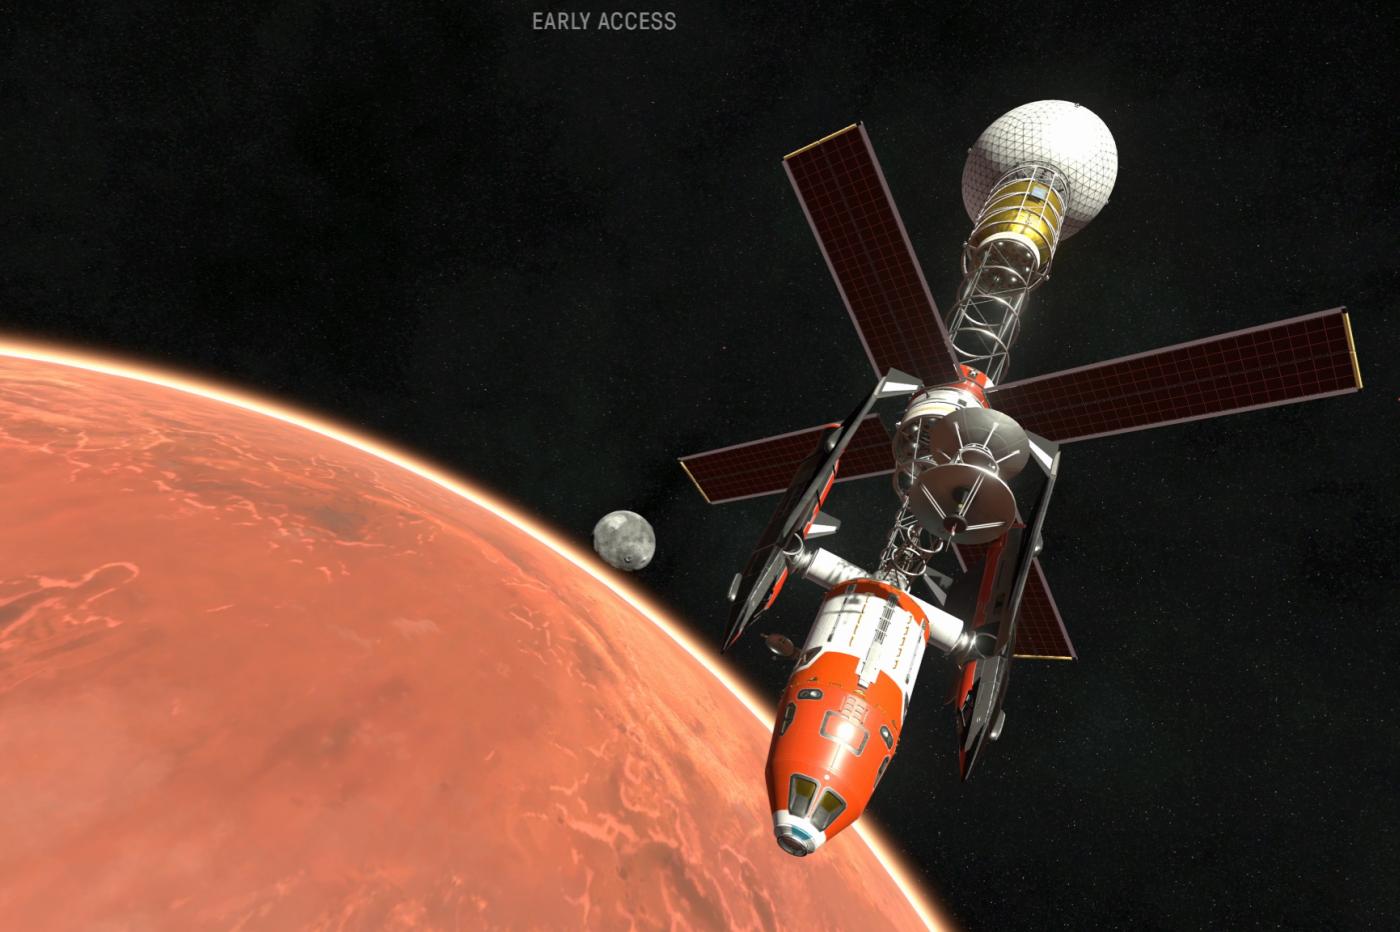 kerbal space program 2 screenshot of Duna orbiting craft